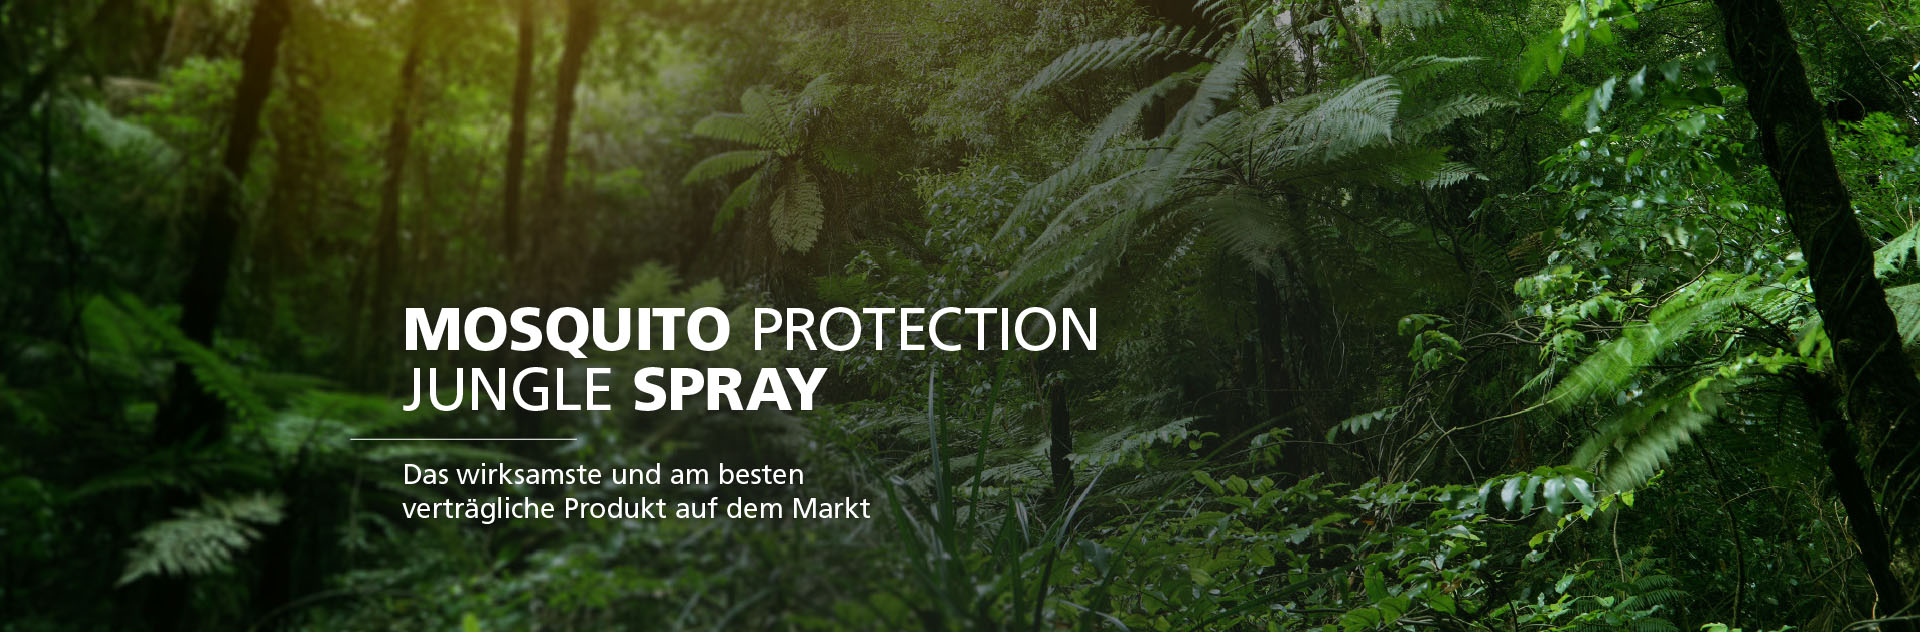 Mosquito Protection Jungle Spray